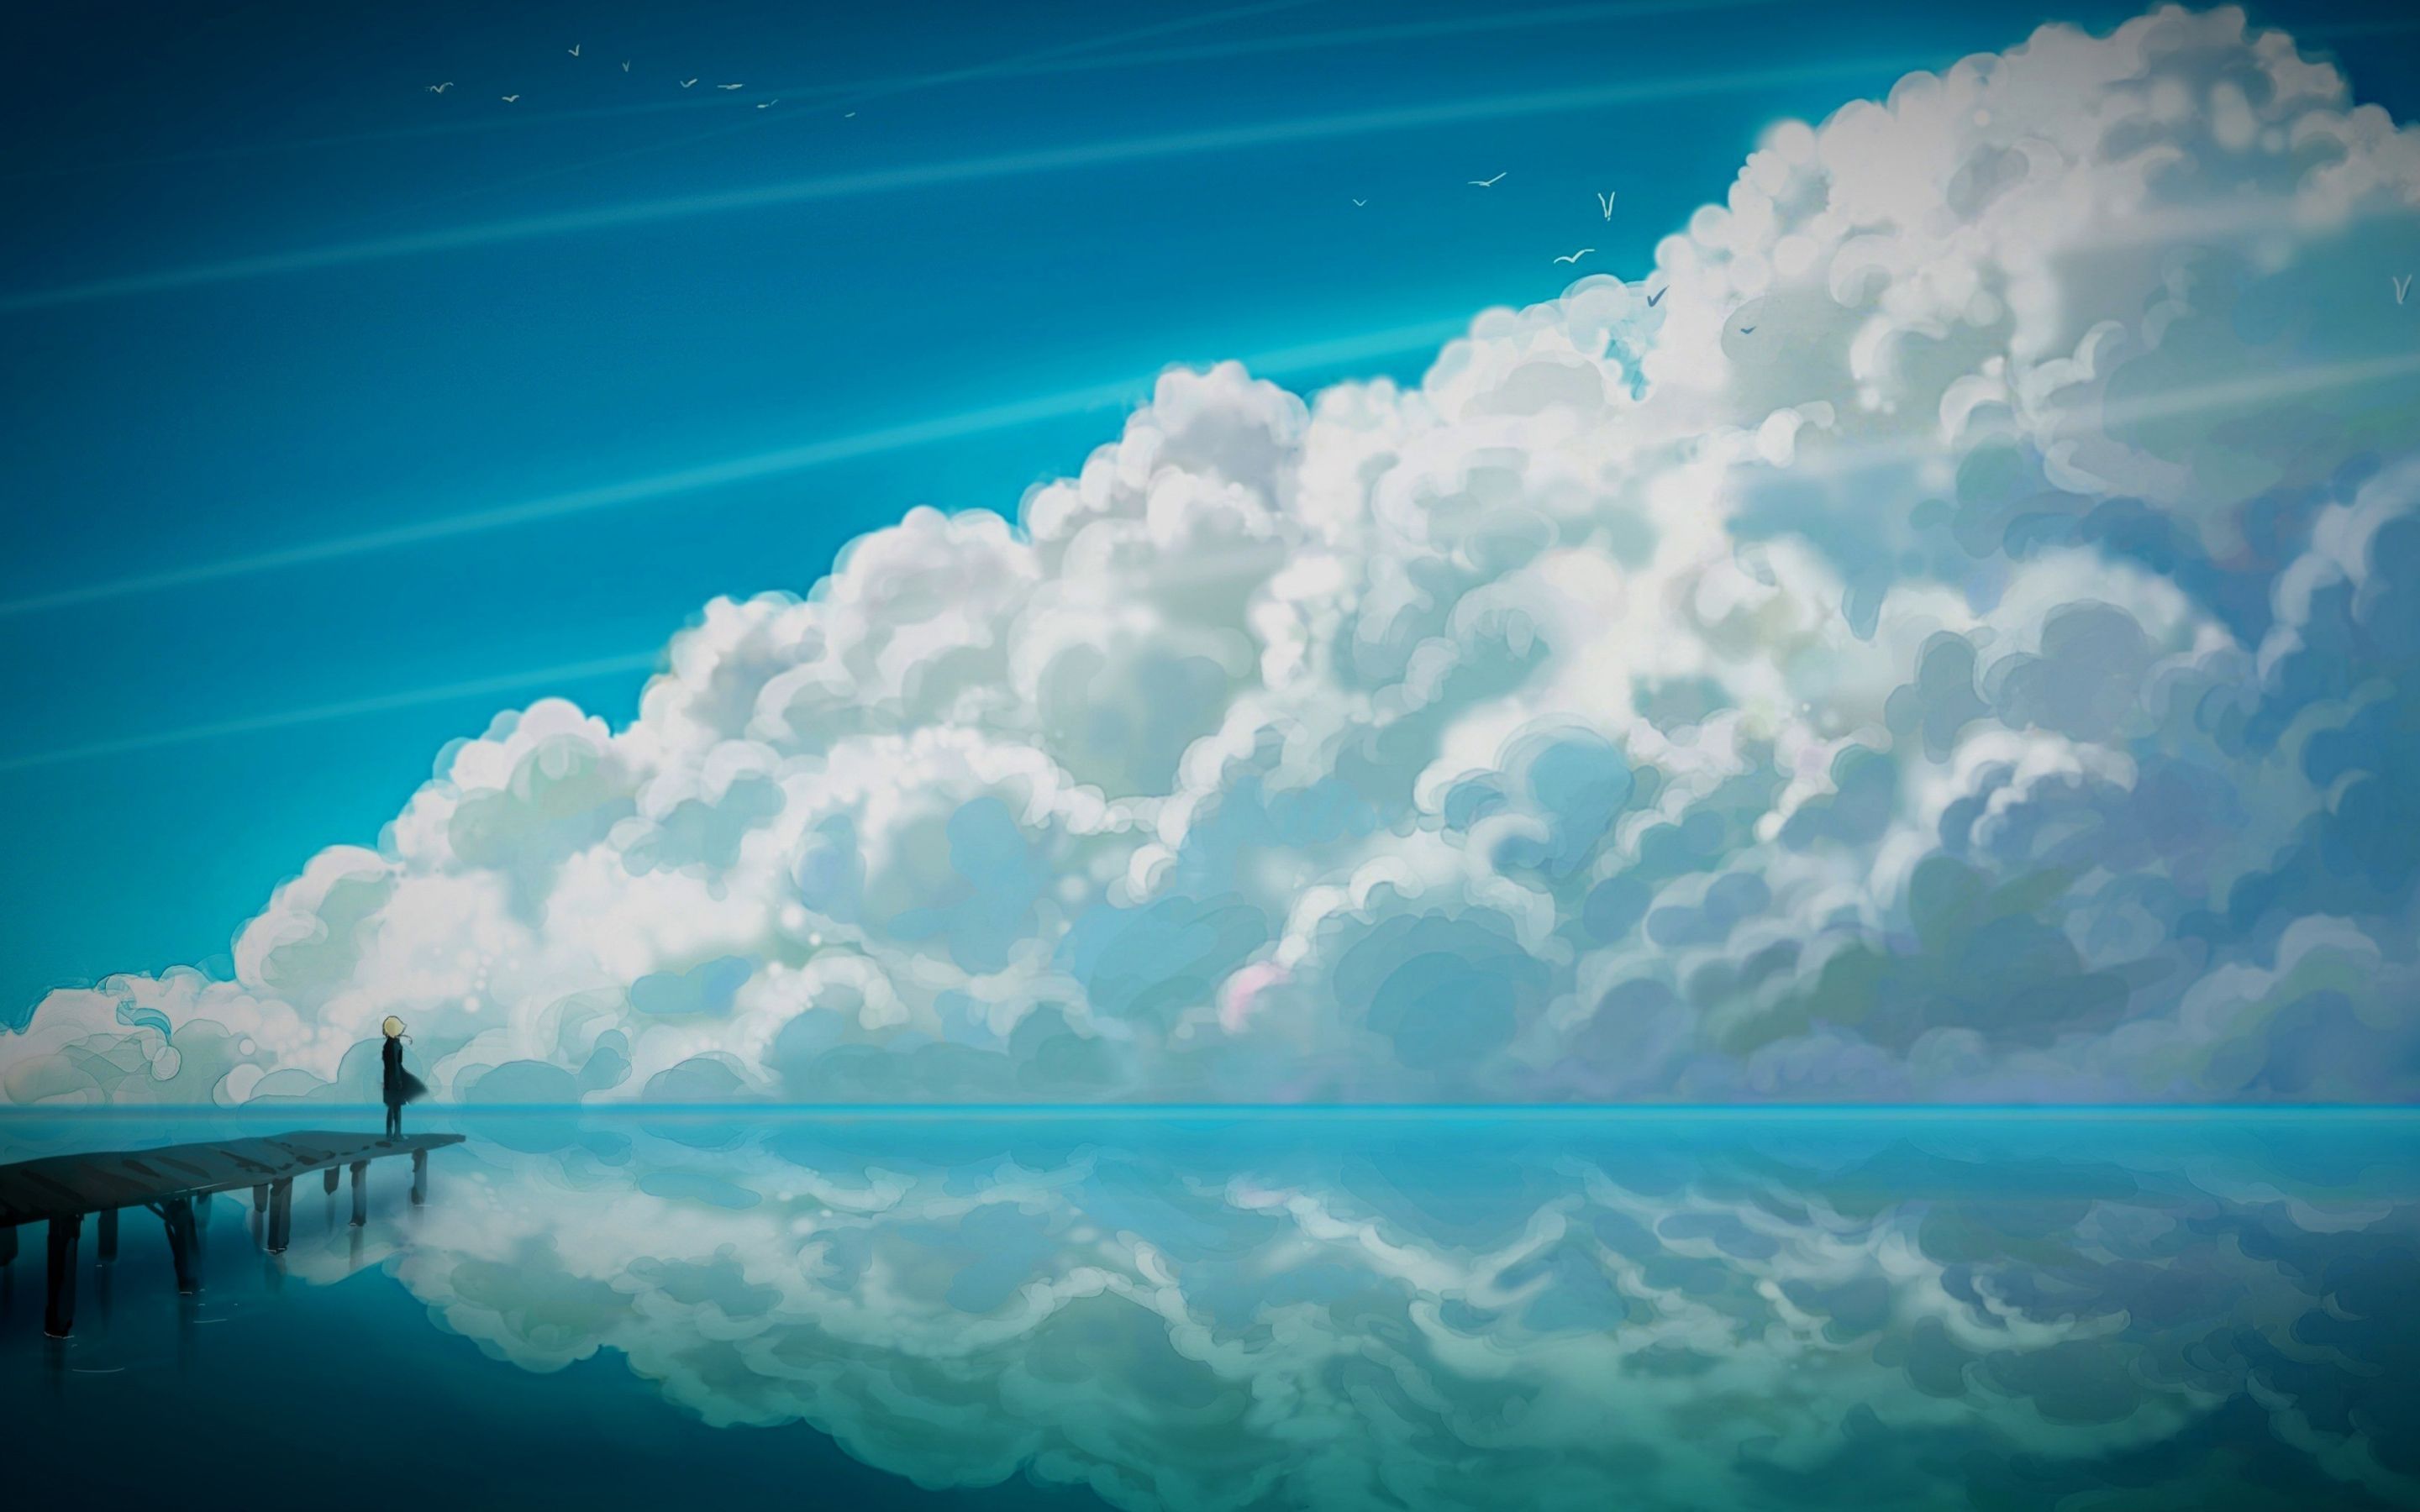 Blue Anime Sky (2880×1800). Anime Scenery Wallpaper, Scenery Wallpaper, Clouds